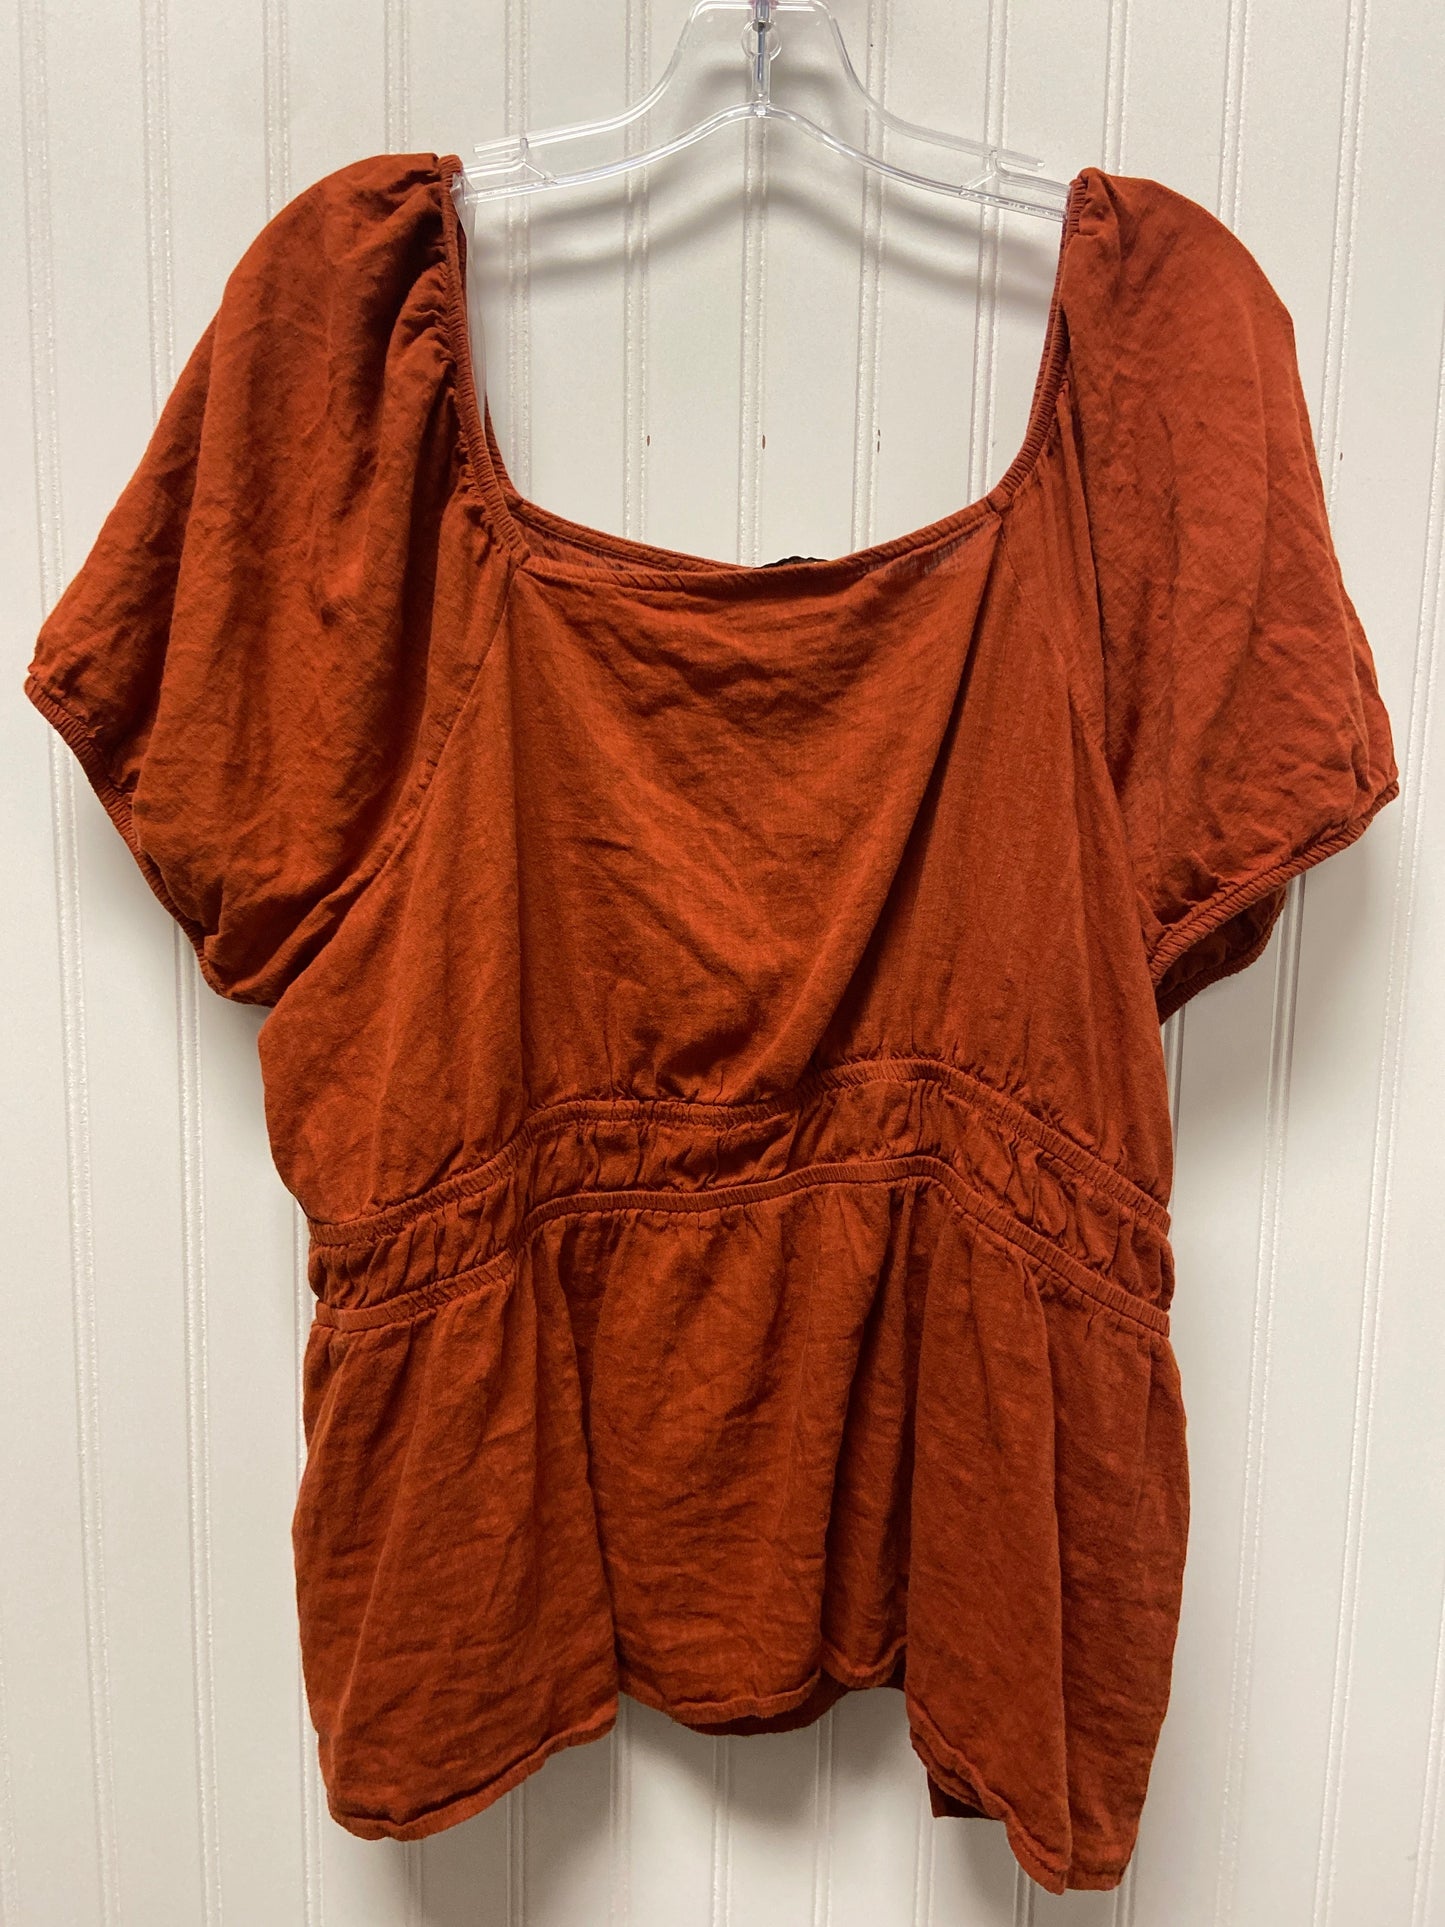 Orange Top Short Sleeve Sonoma, Size 2x